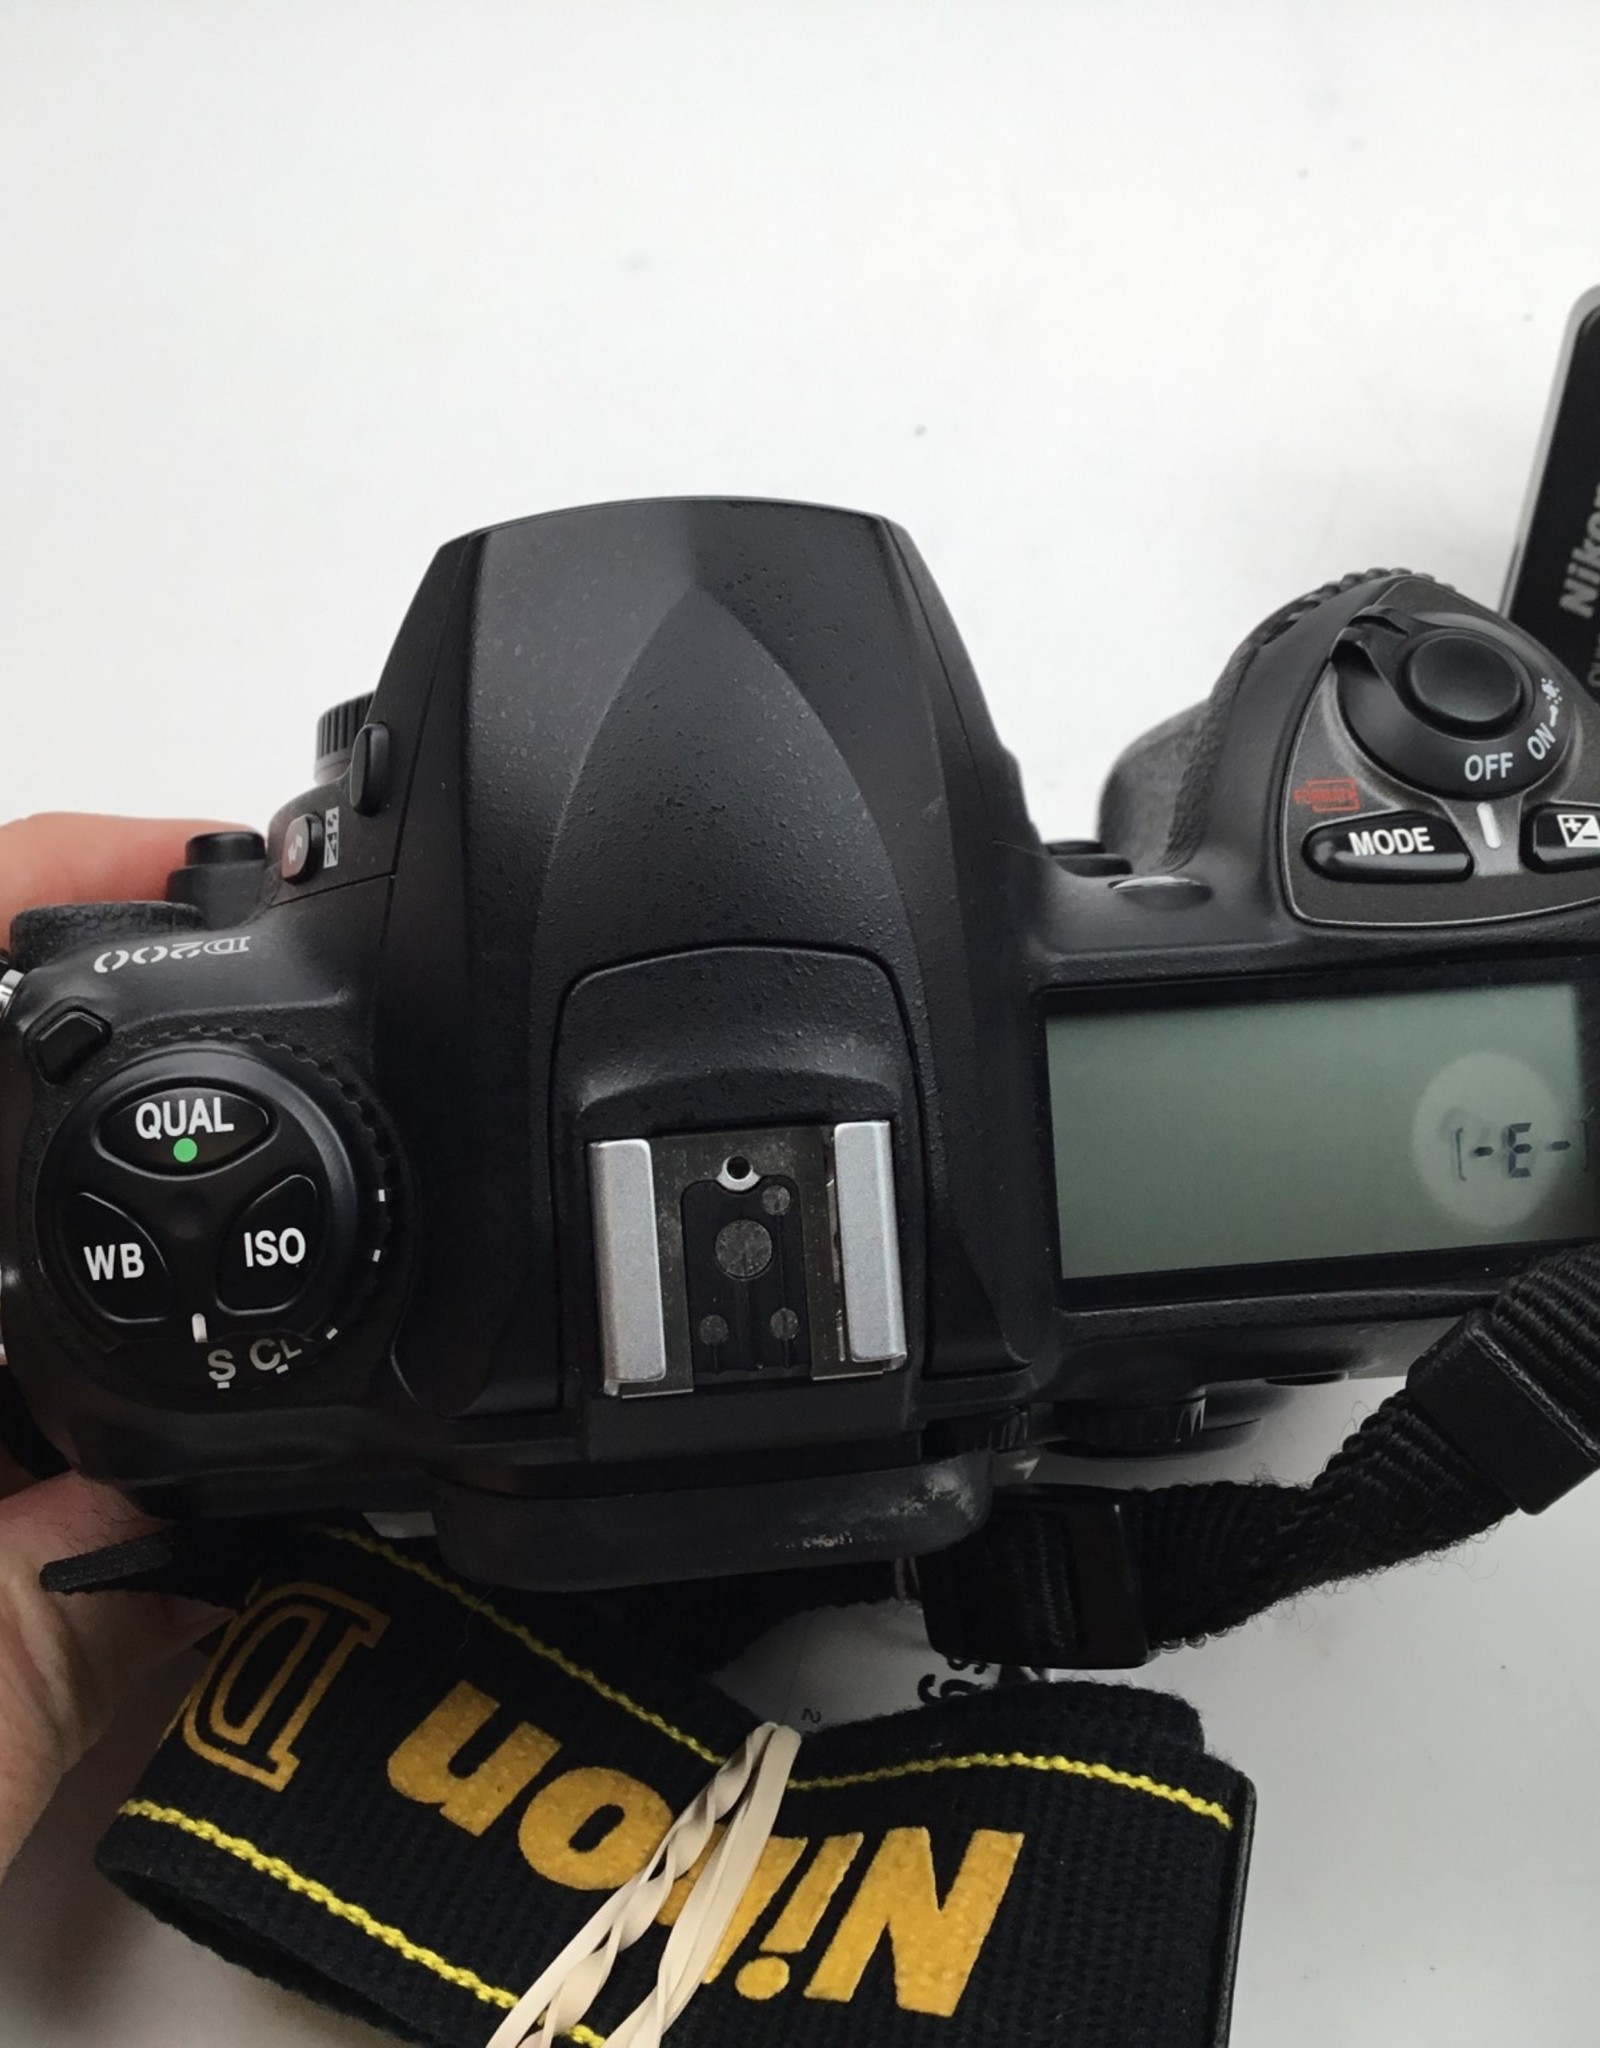 NIKON Nikon D200 Camera Body Shutter Count 4991 Used Good